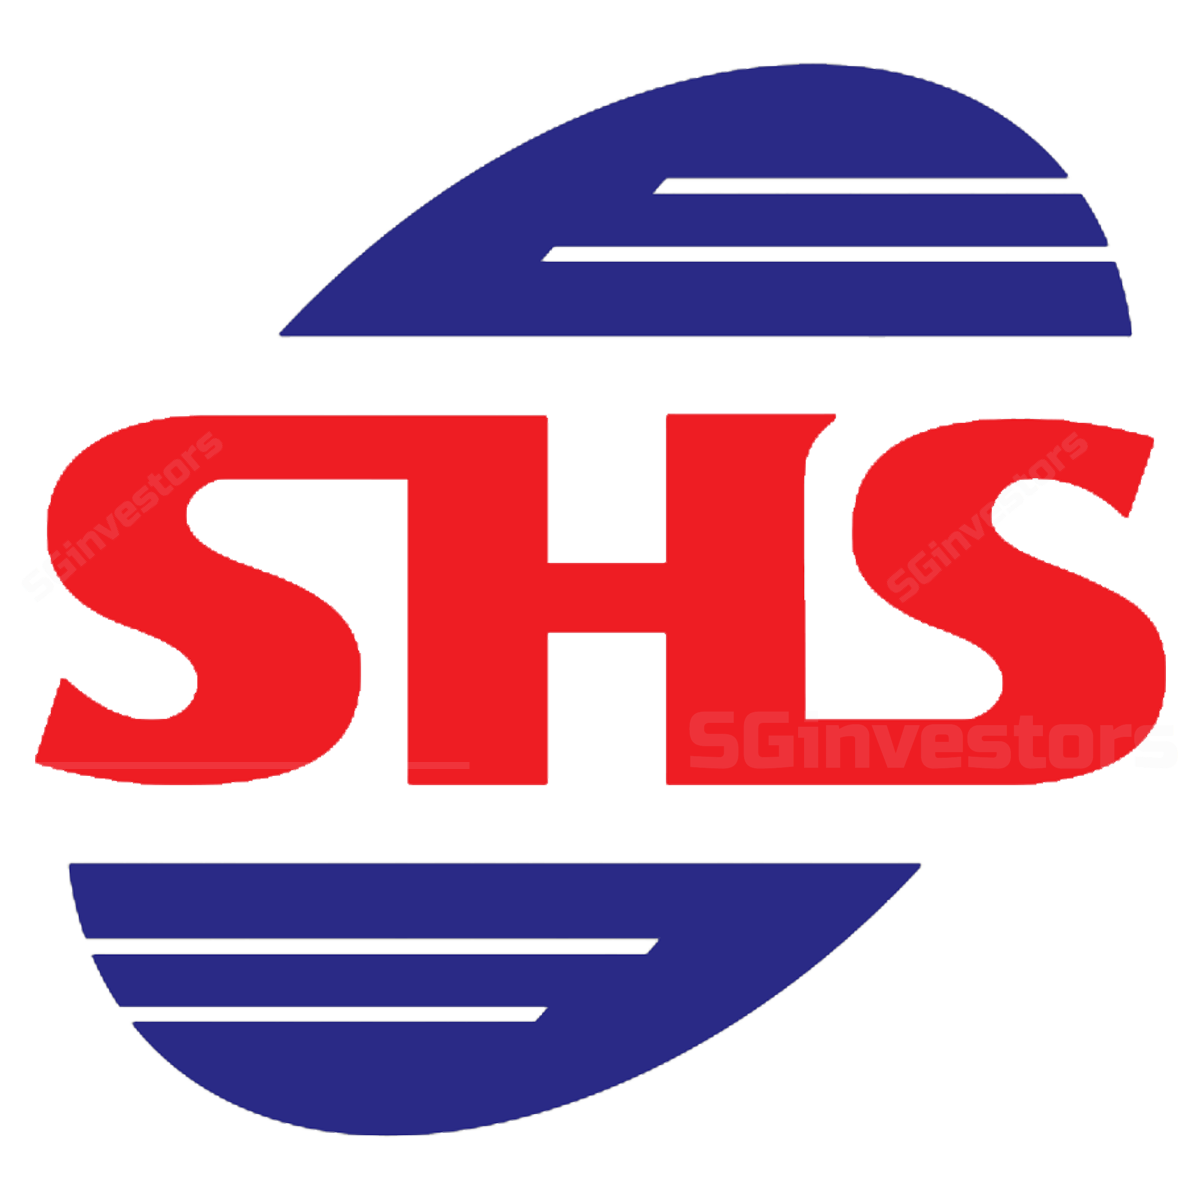  SHS Holdings Latest Announcements SGX 566 SG Investors io